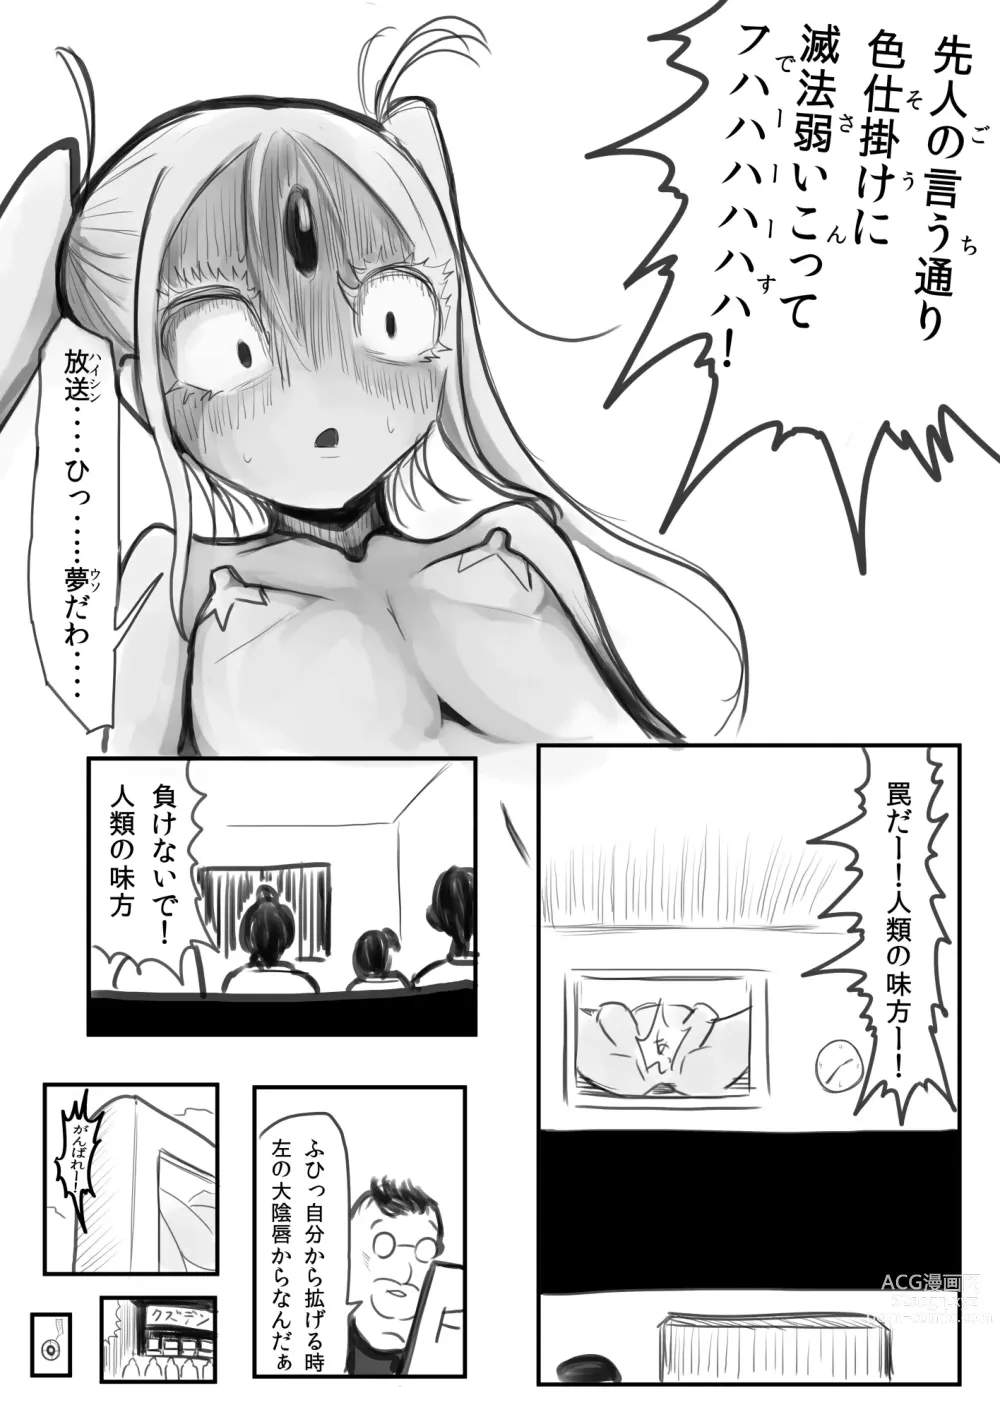 Page 115 of manga Deramax Dragon Final Dishonored Vol.2